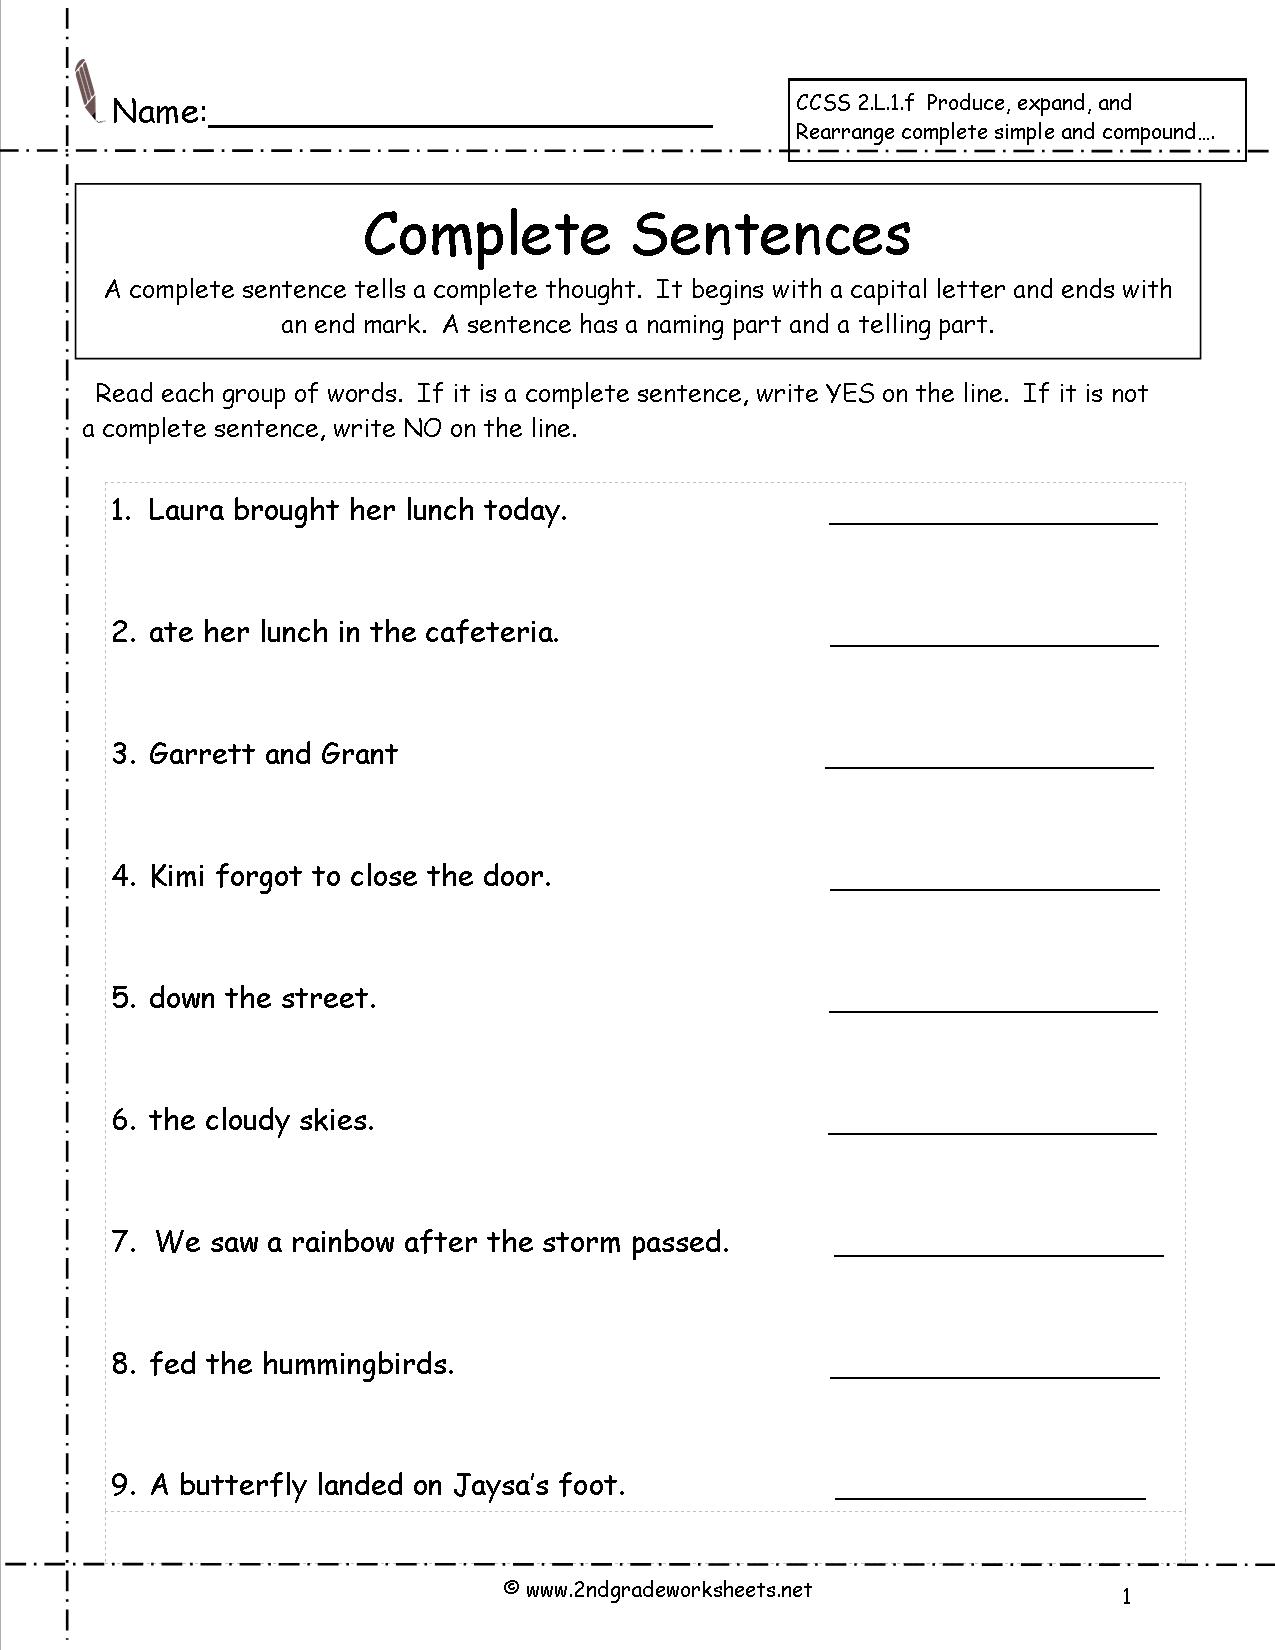 english-grade-8-compound-sentences